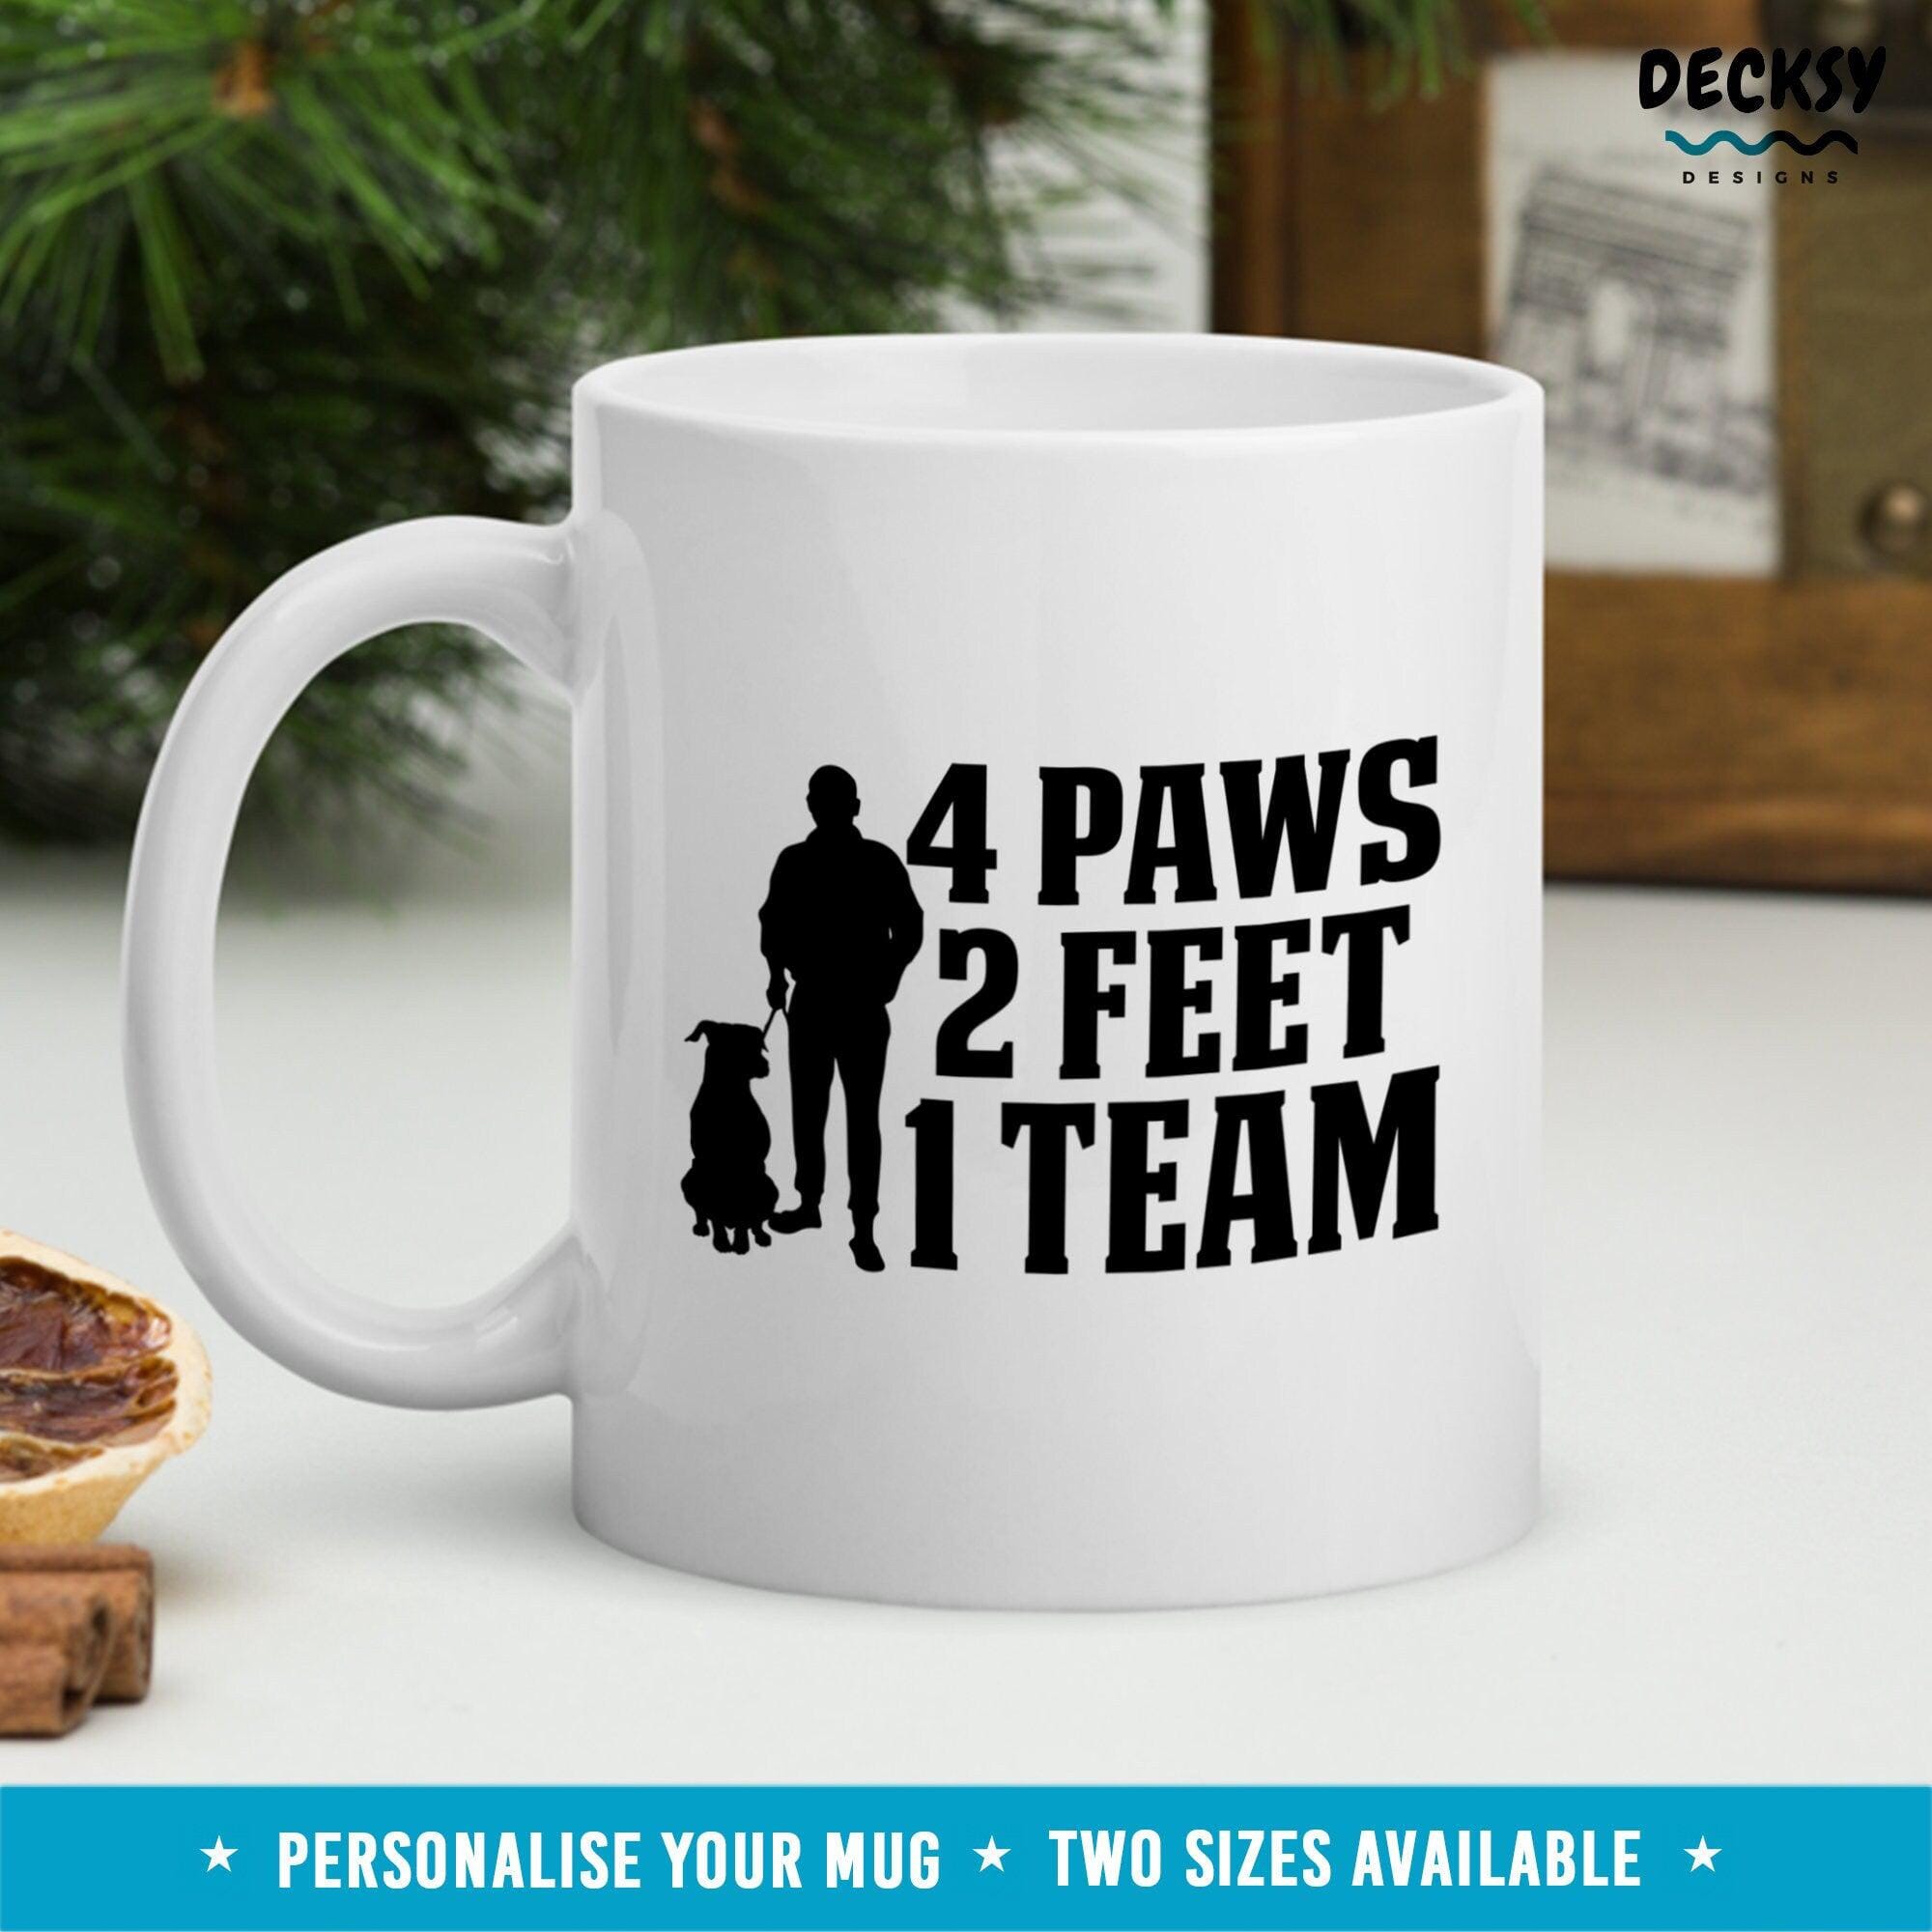 Dog Training Mug, Dog Lover Gift-Home & Living:Kitchen & Dining:Drink & Barware:Drinkware:Mugs-DecksyDesigns-11 Oz-NO PERSONALISATION-DecksyDesigns